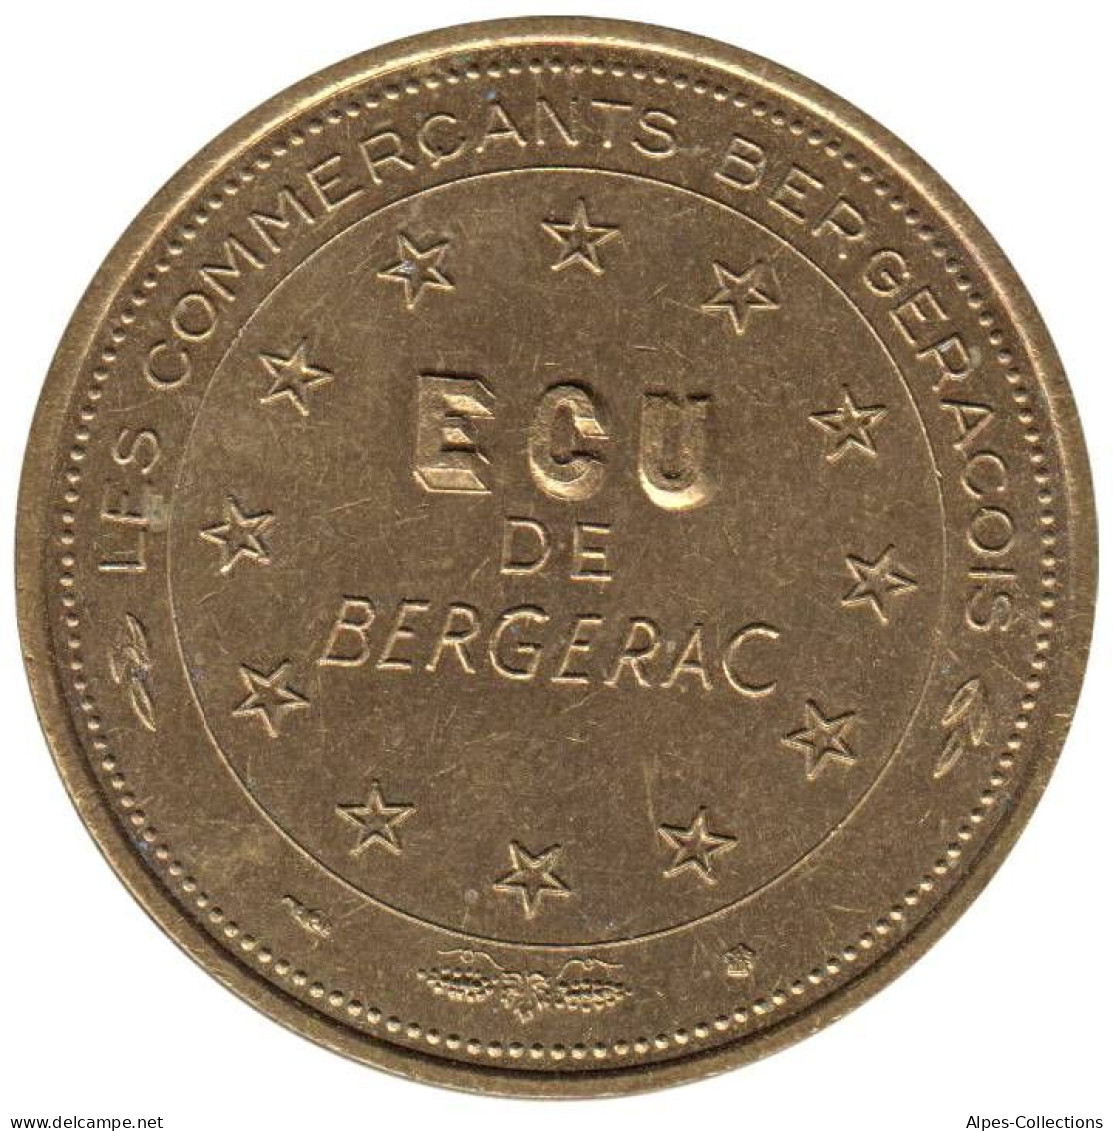 BERGERAC - EC0010.4 - 1 ECU DES VILLES - Réf: T1 - 1993 - Euros Des Villes